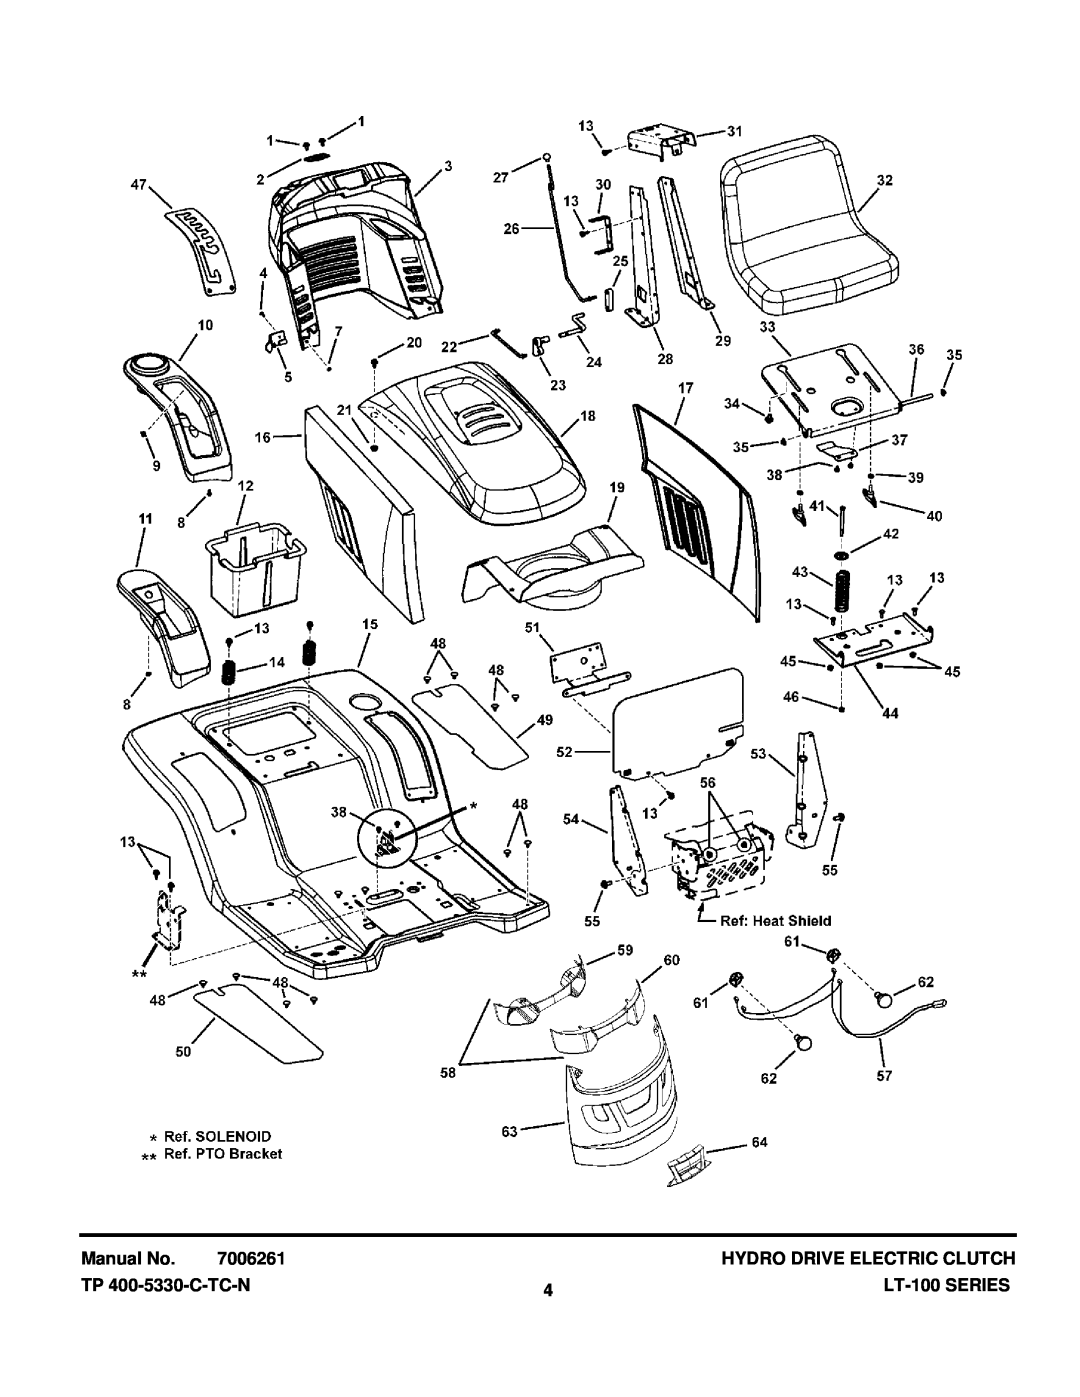 Snapper LT-100 Series manual Manual No, 7006261, Hydro Drive Electric Clutch, TP 400-5330-C-TC-N, LT-100SERIES 